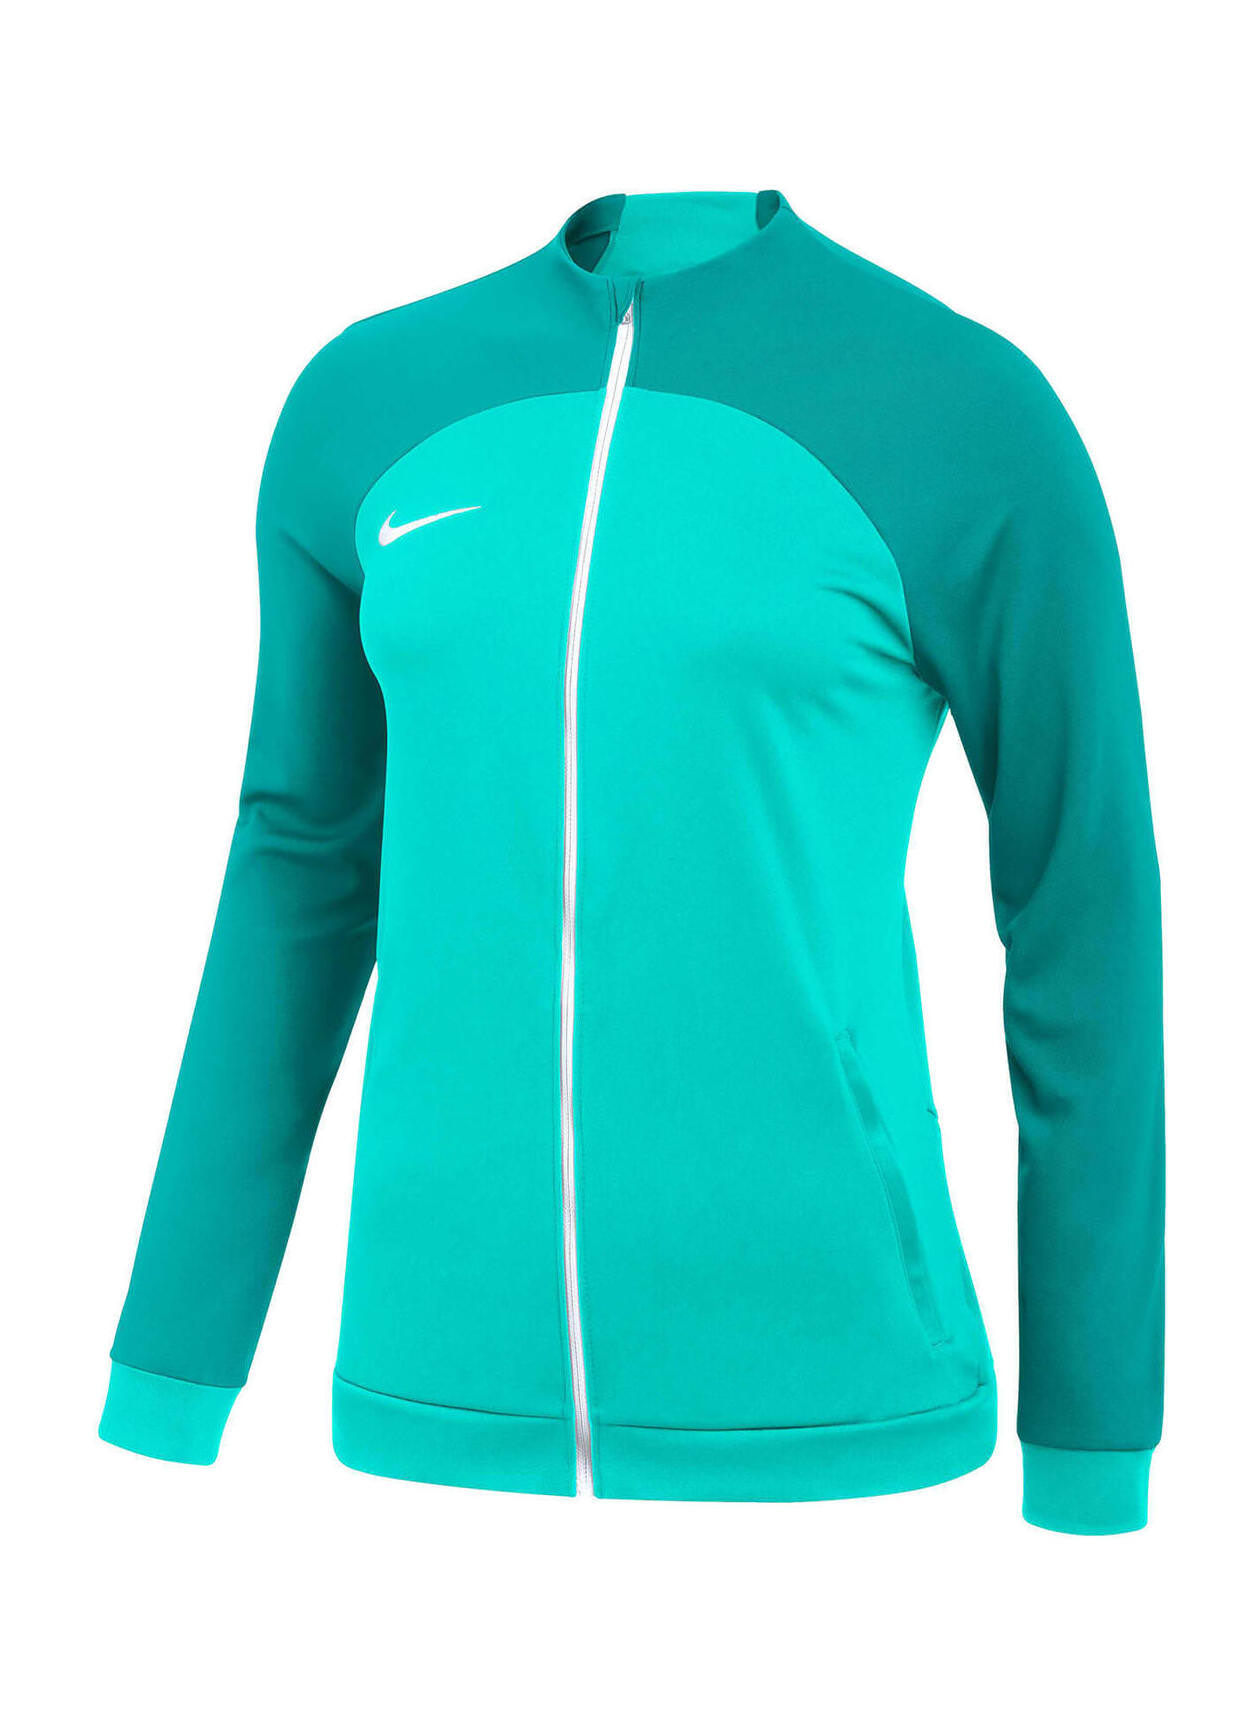 Nike Women's Hyper Turq / Washed Teal Dri-FIT Academy Pro Jacket